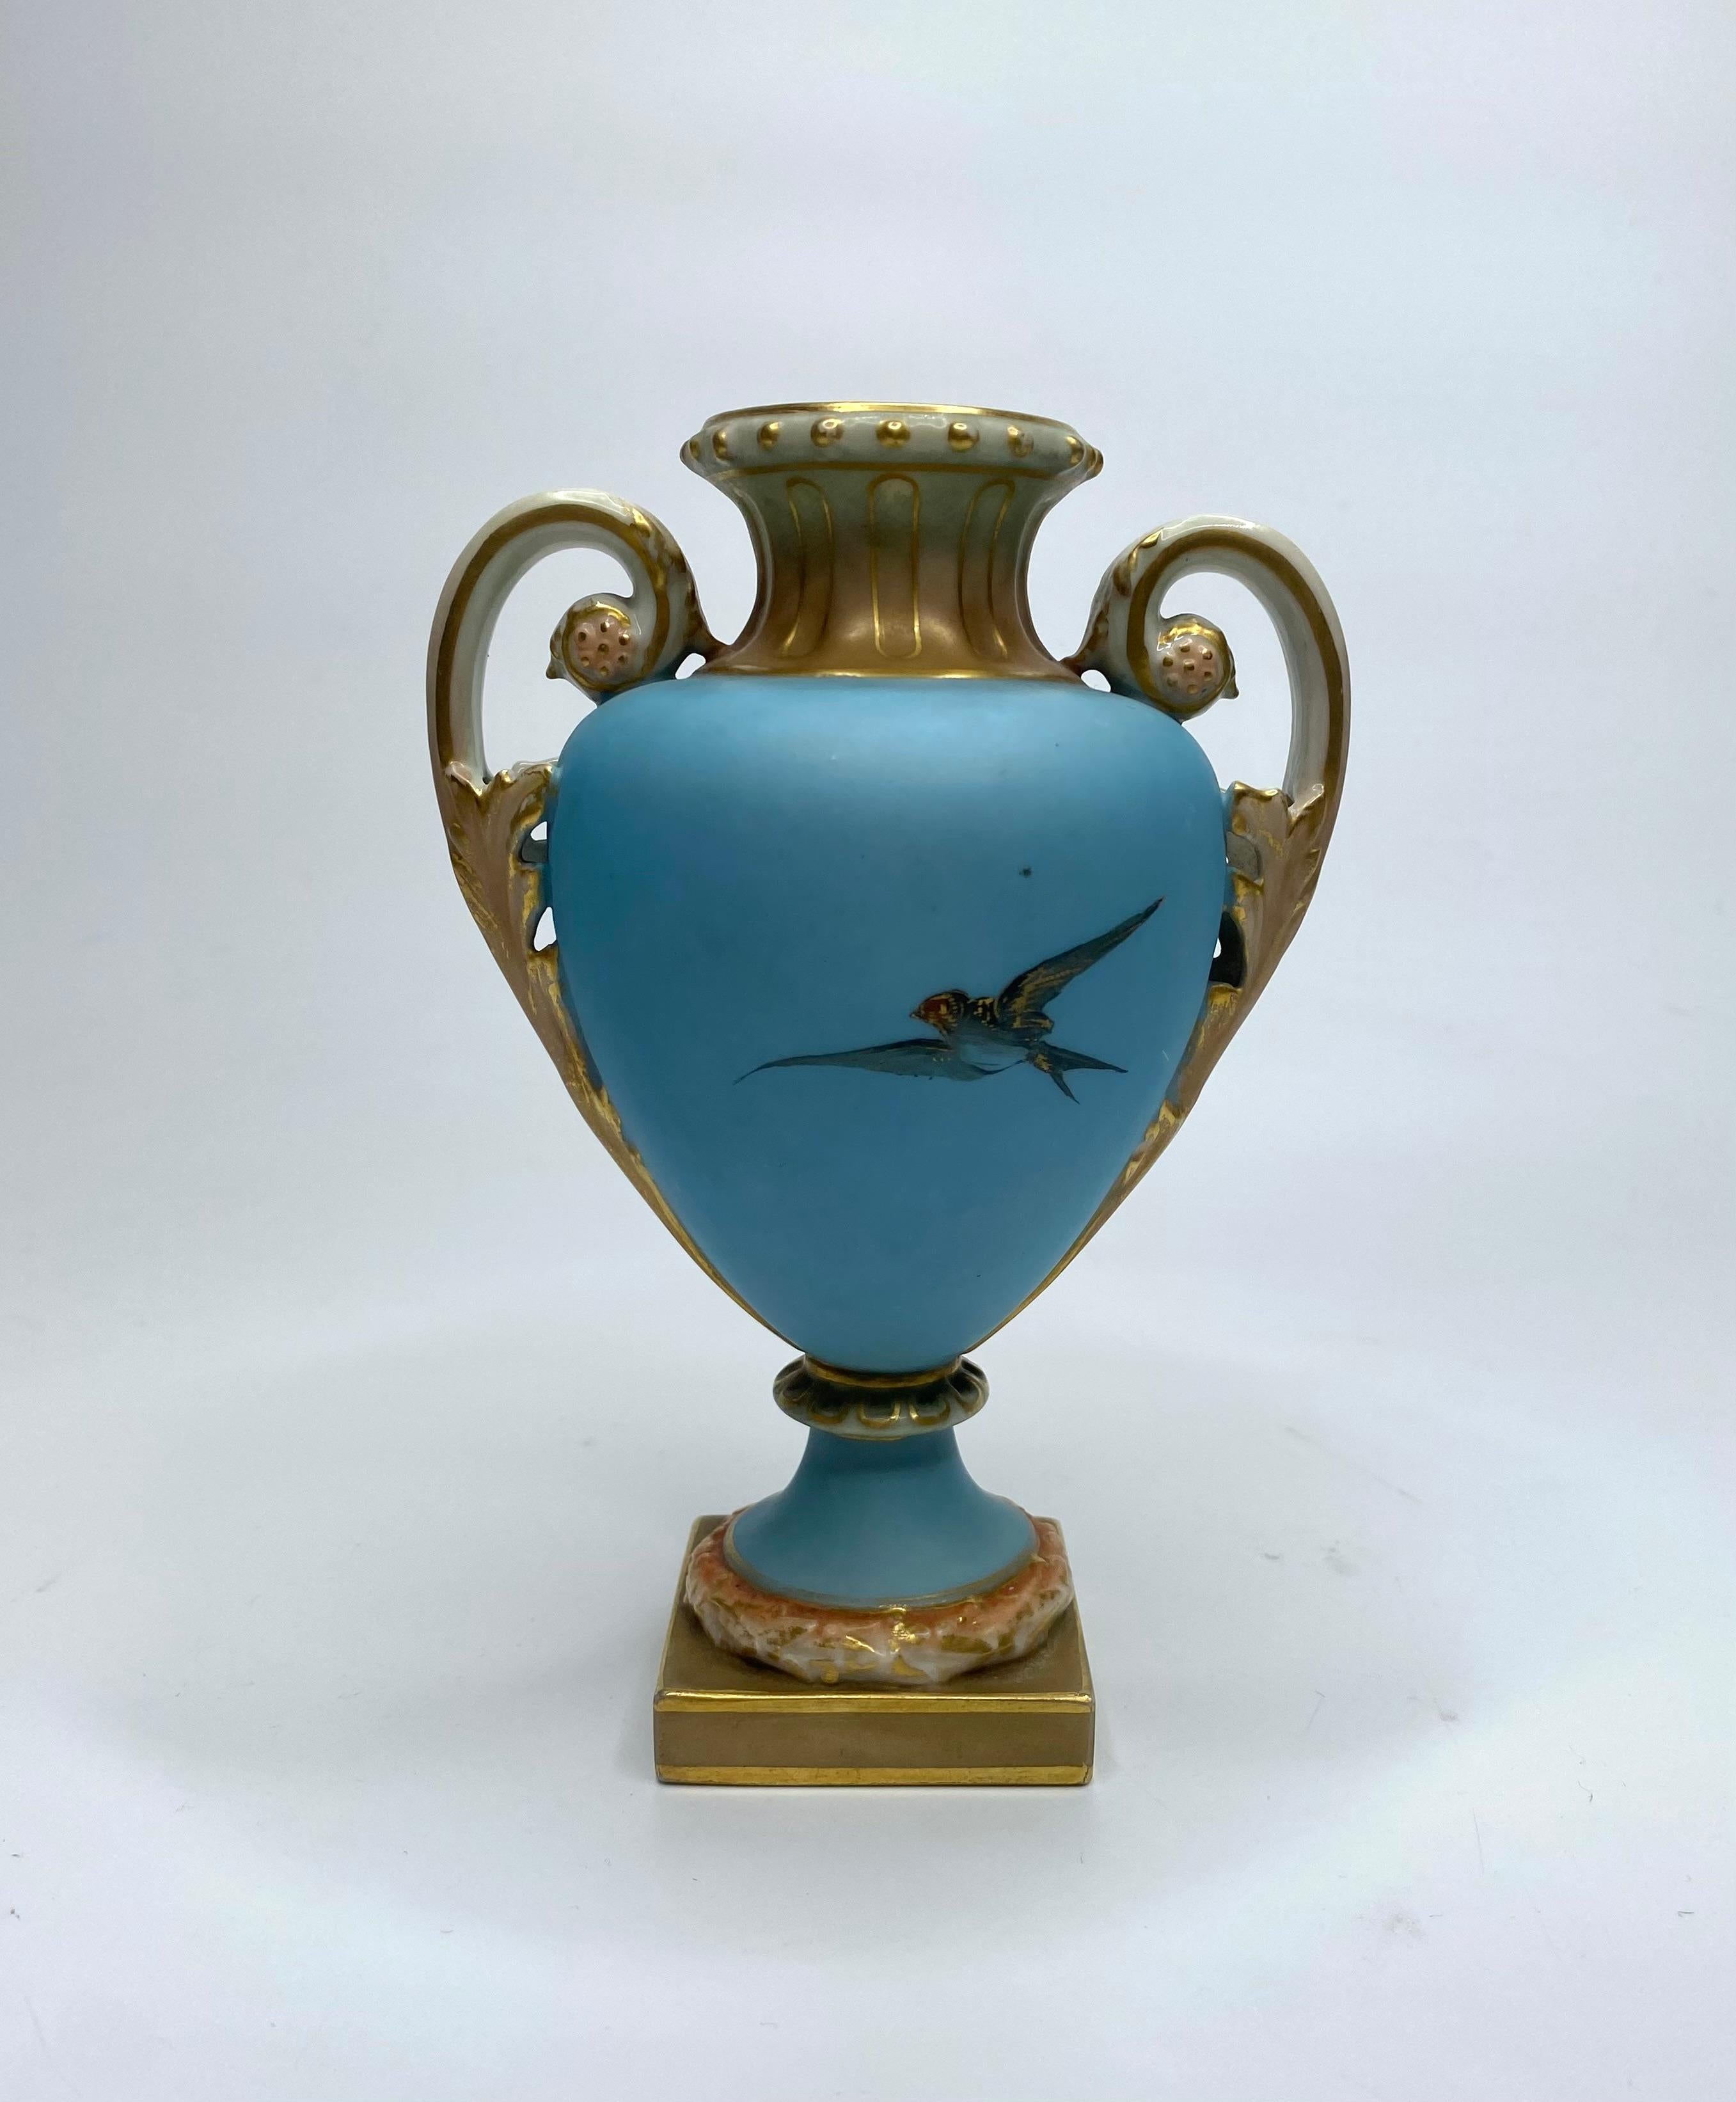 Fired Royal Worcester porcelain vases. Swans by Charles Baldwyn, d. 1904. For Sale